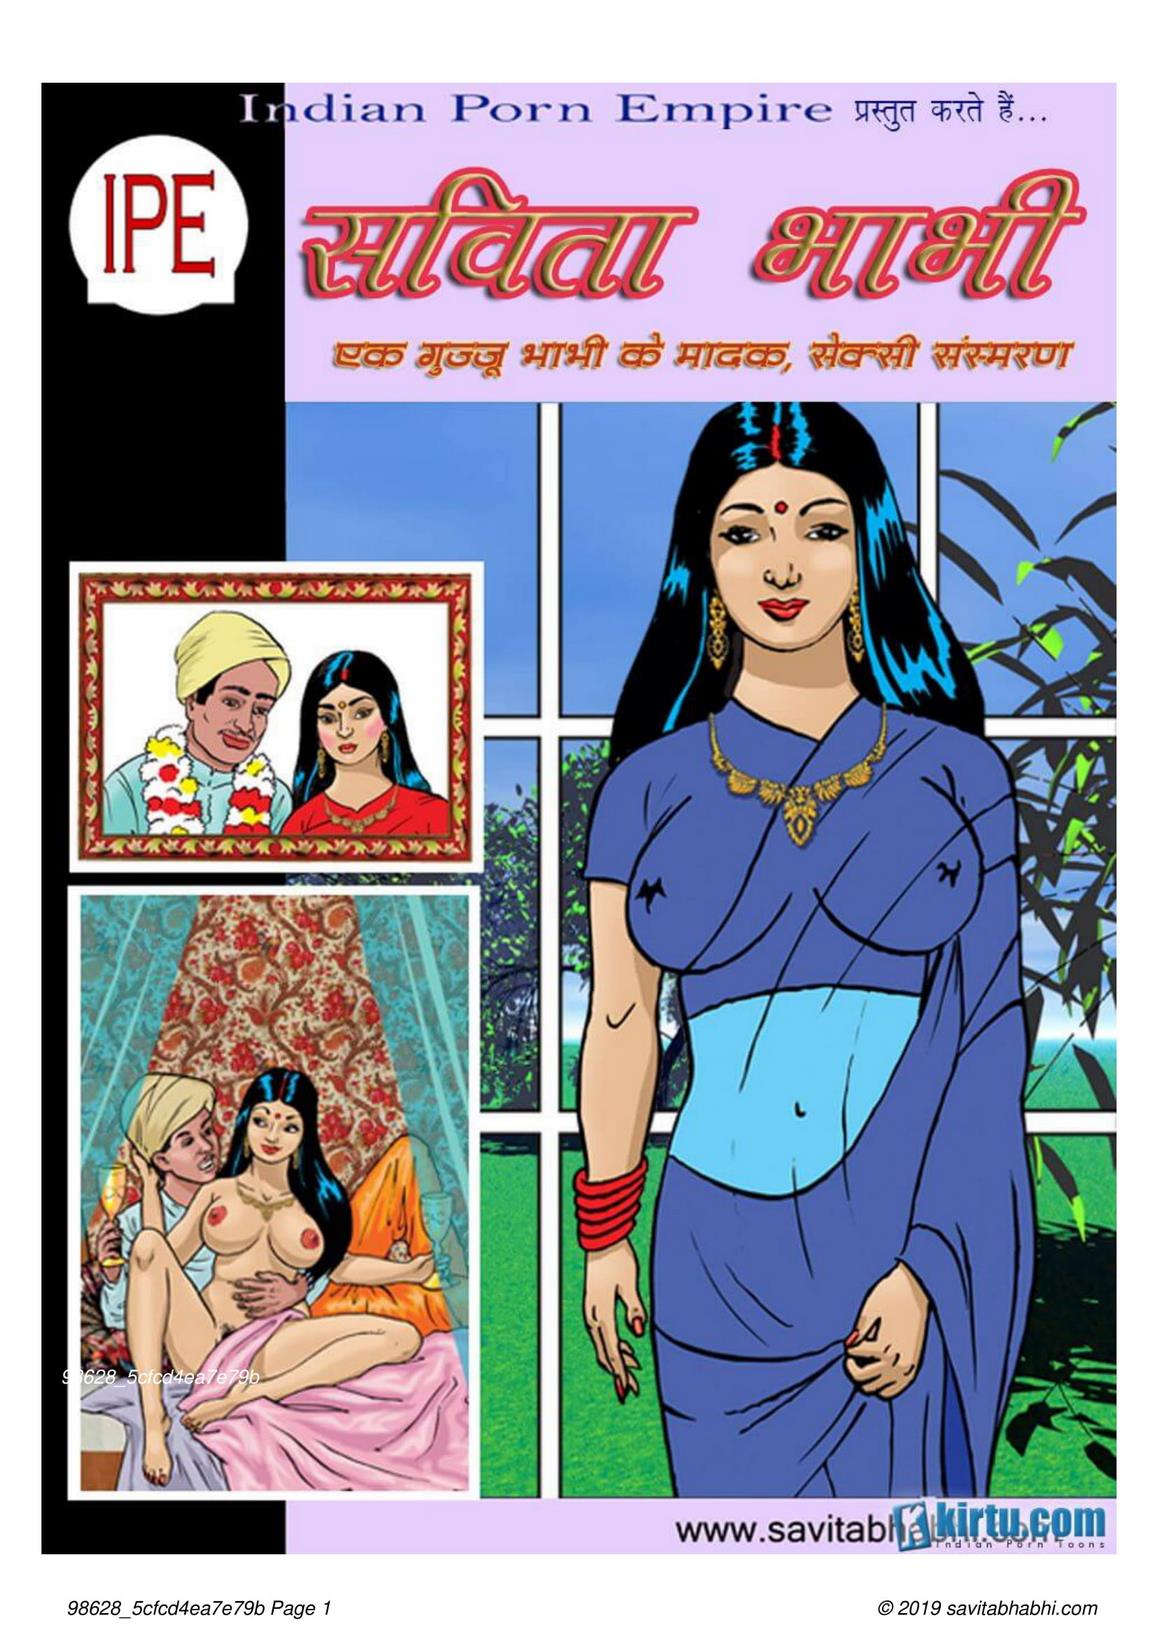 Savita Bhabhi Episode 01 Hindi - Bra Bechne Aaya (ब्रा बेचने आया) - 11 - FSIComics